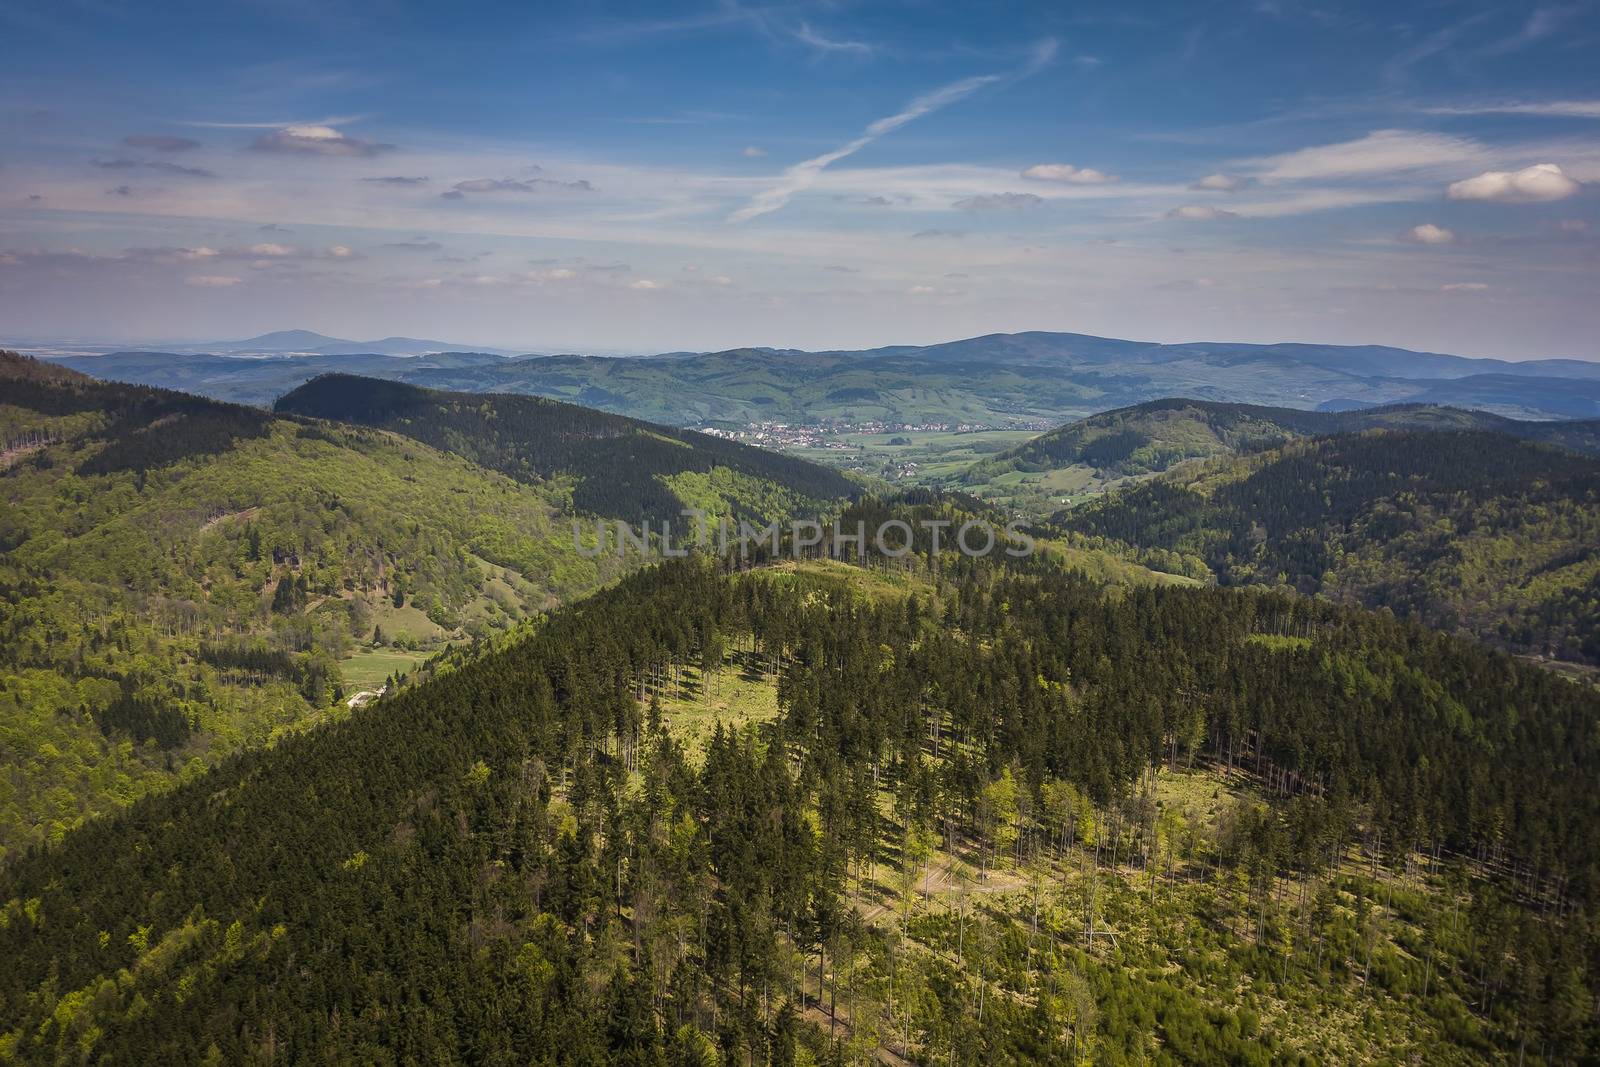 Granicznik Mountain - Suche Mountains in Sudetes Poland